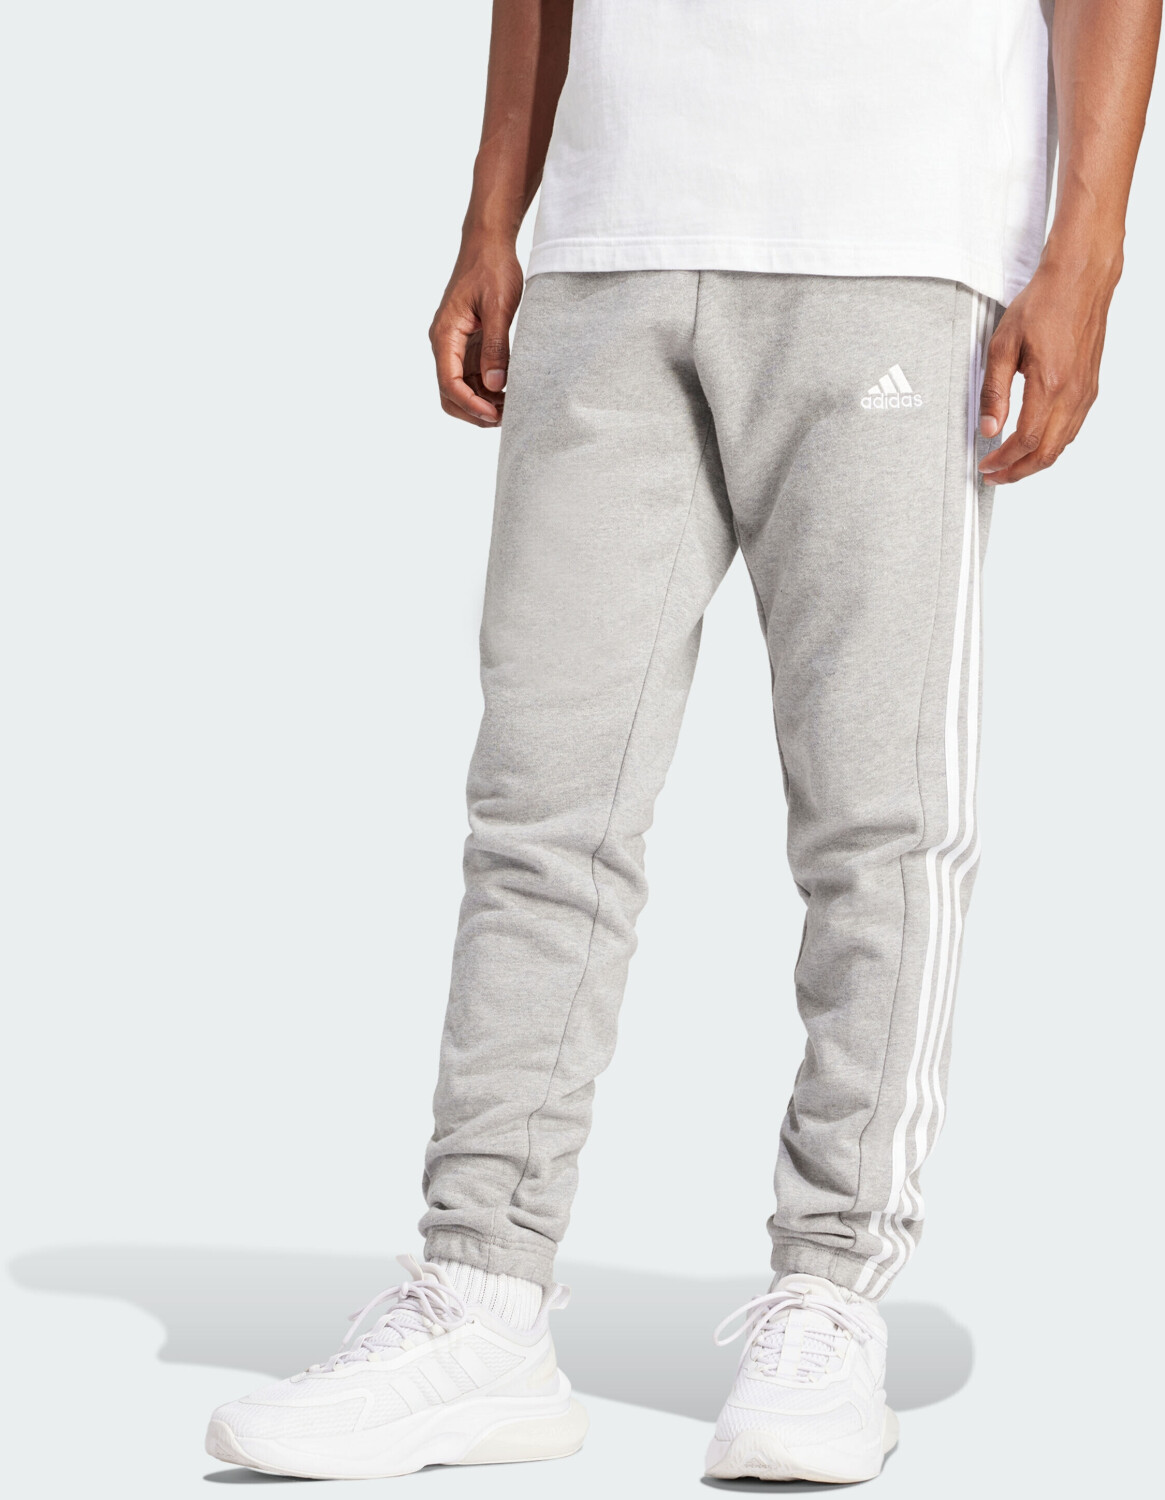 Adidas Man Essentials French Terry Tall 3-Stripes grey € 37,52 Tapered medium | Preisvergleich (IC0052 Pants ) ab bei Cuff heather Elastic /white